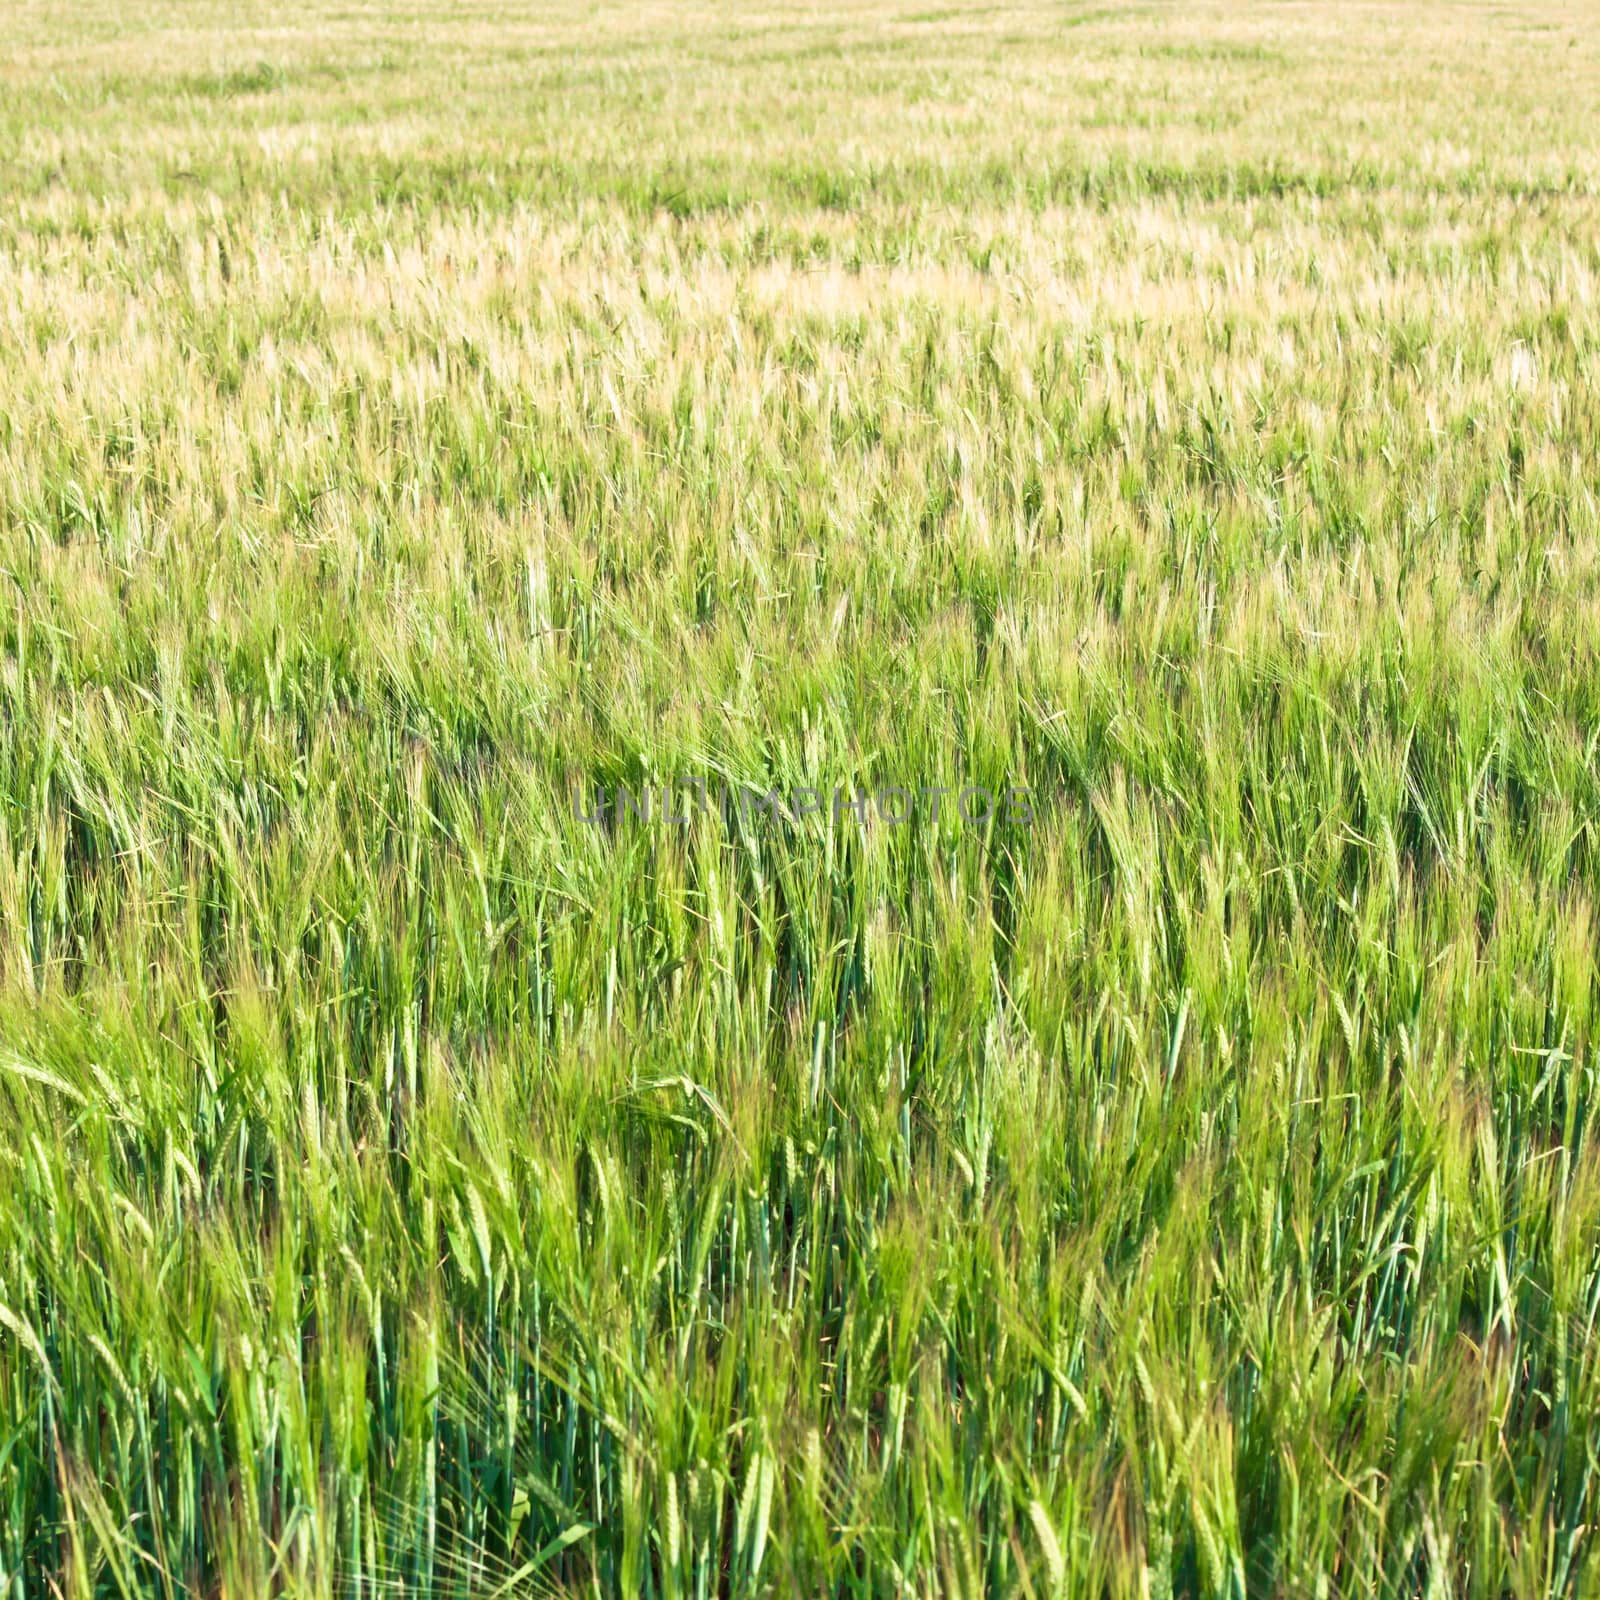 Barley crop growing in the summer in a field